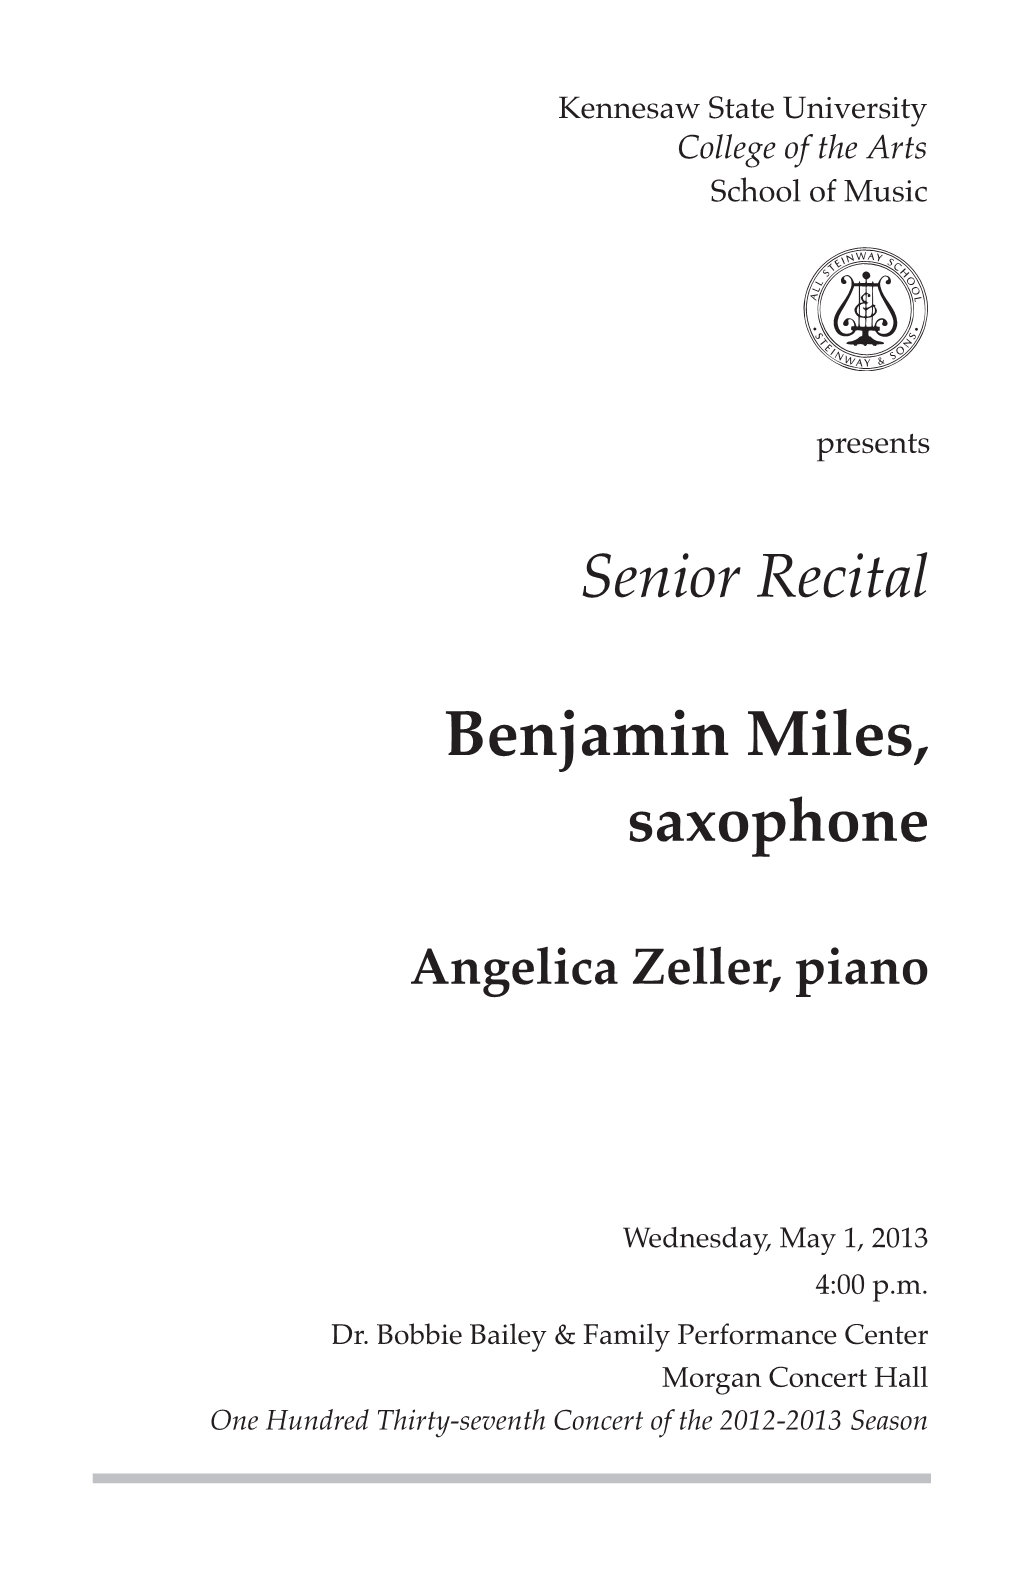 Senior Recital: Benjamin Miles, Saxophone